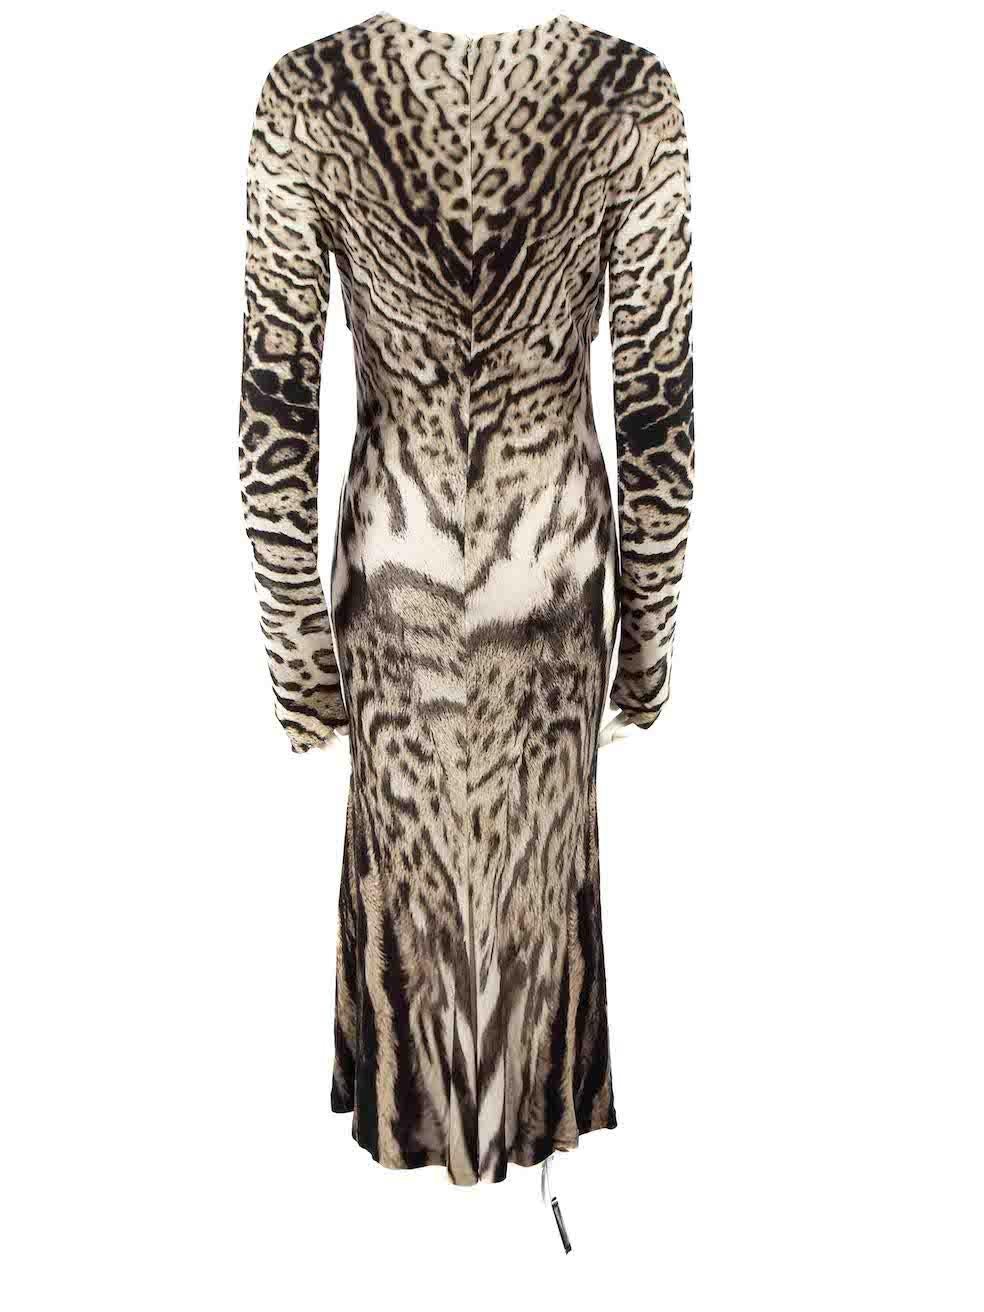 Roberto Cavalli Grey Leopard Print Midi Dress Size L In Good Condition For Sale In London, GB